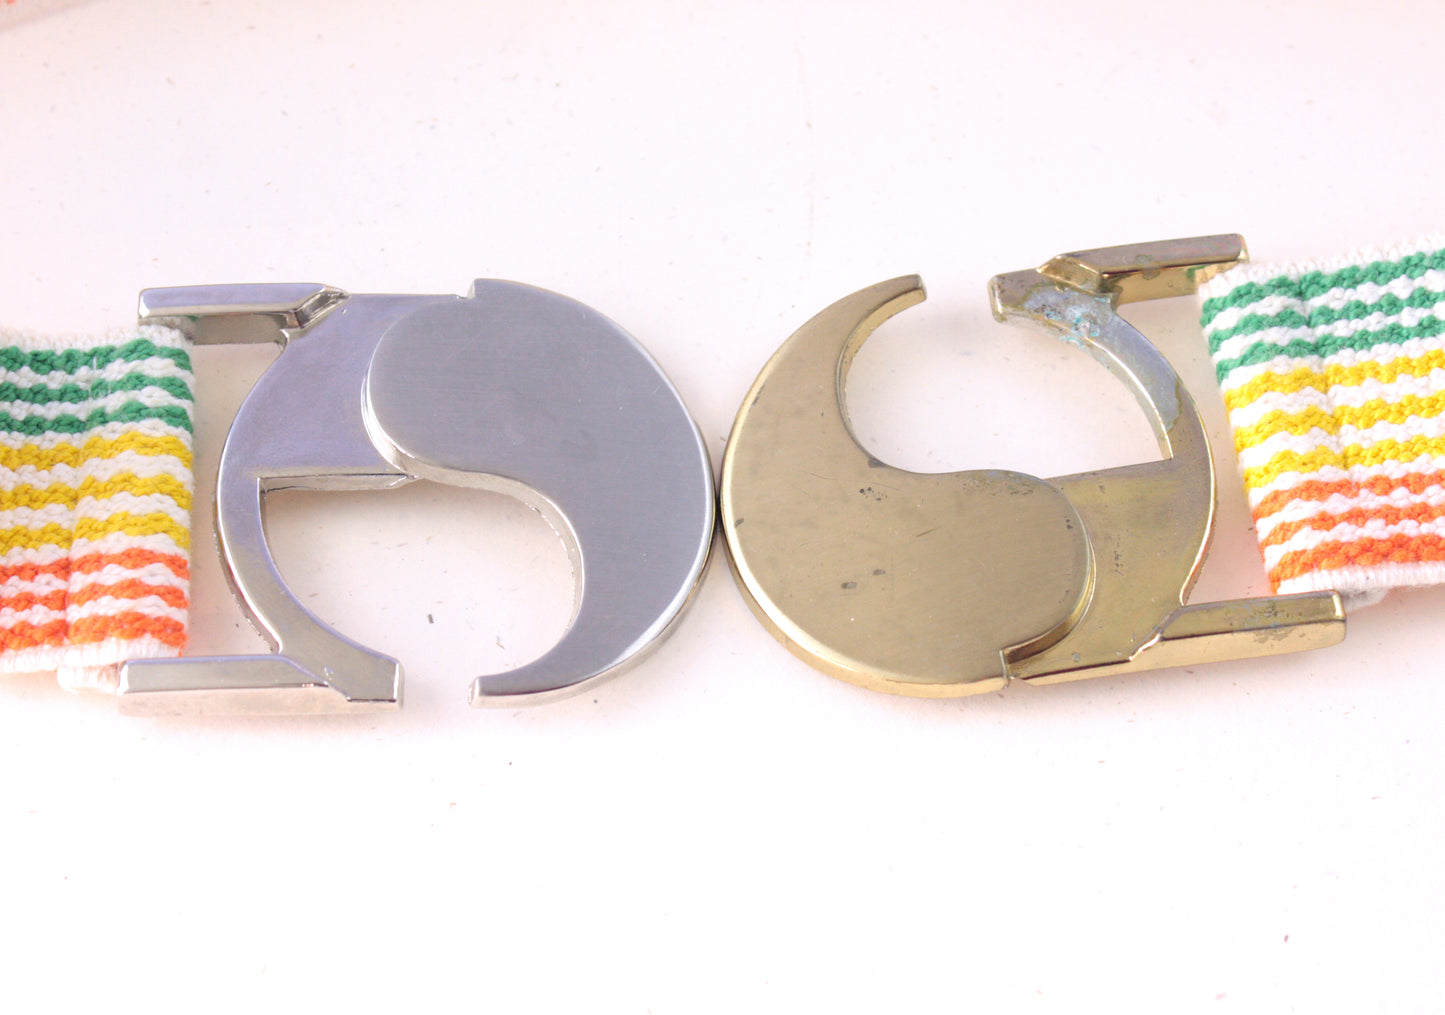 Yin Yang Gold & Silver Cinch Belt Bright Colors